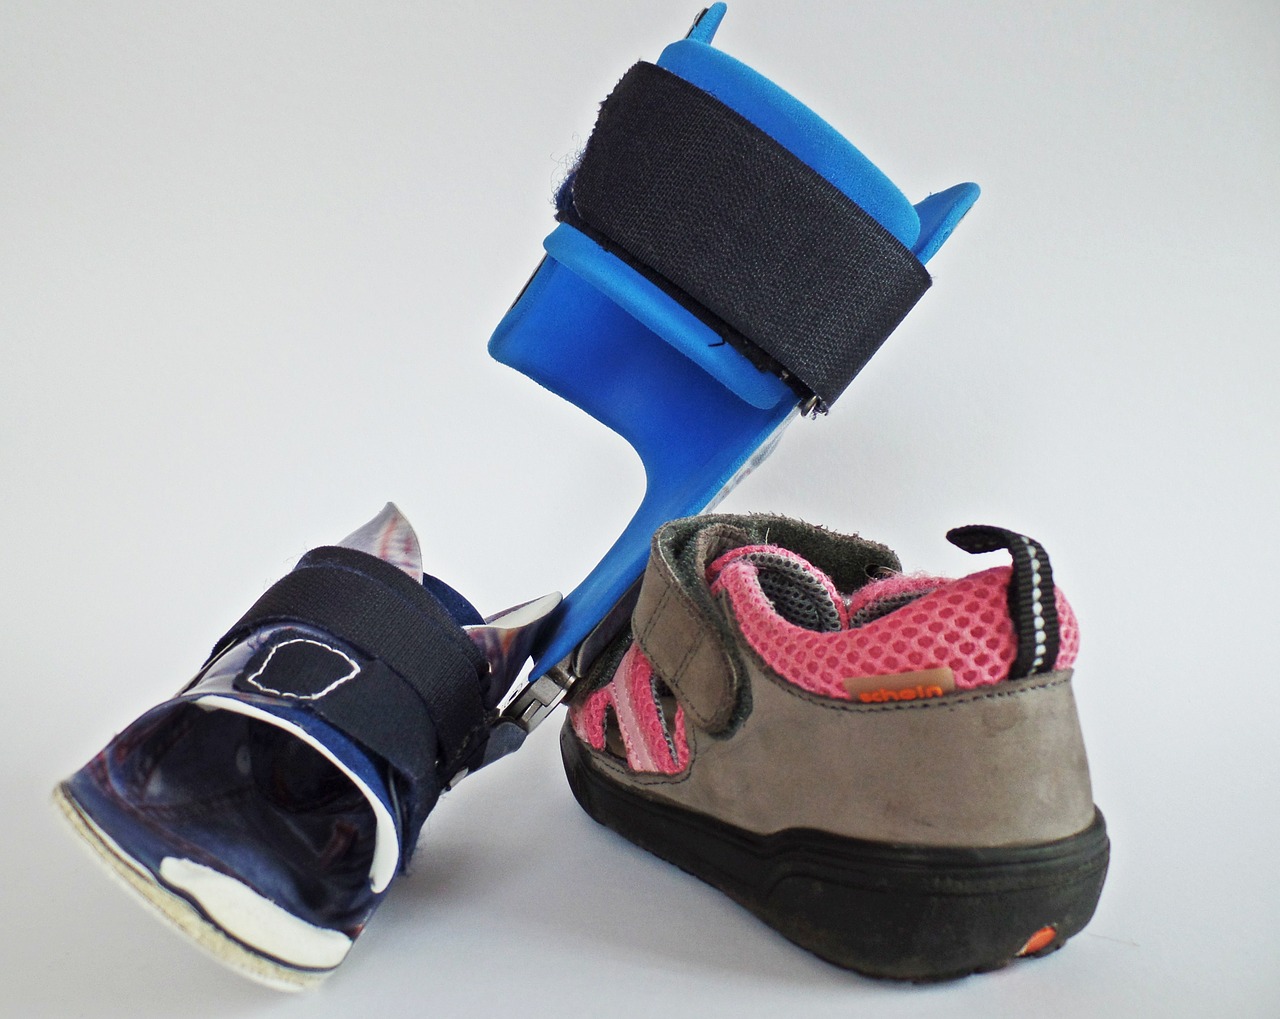 orthosis rail shoes free photo